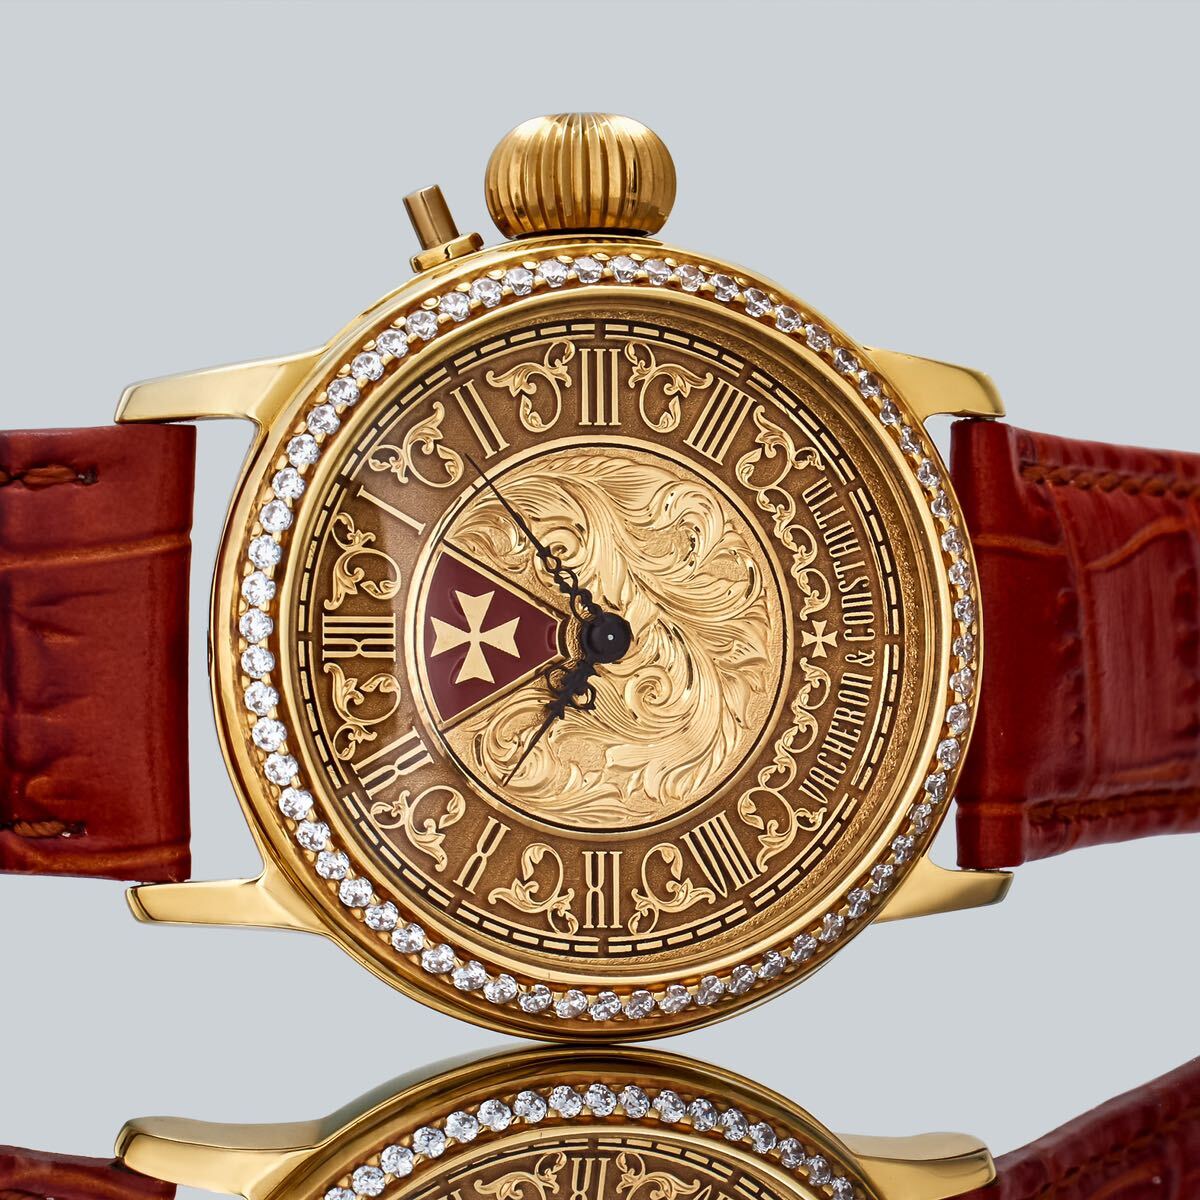 Marriage Watch Vacheron & Constantin 35mm Men's Wristwatch With Pocket Watch Manual Winding Skeleton